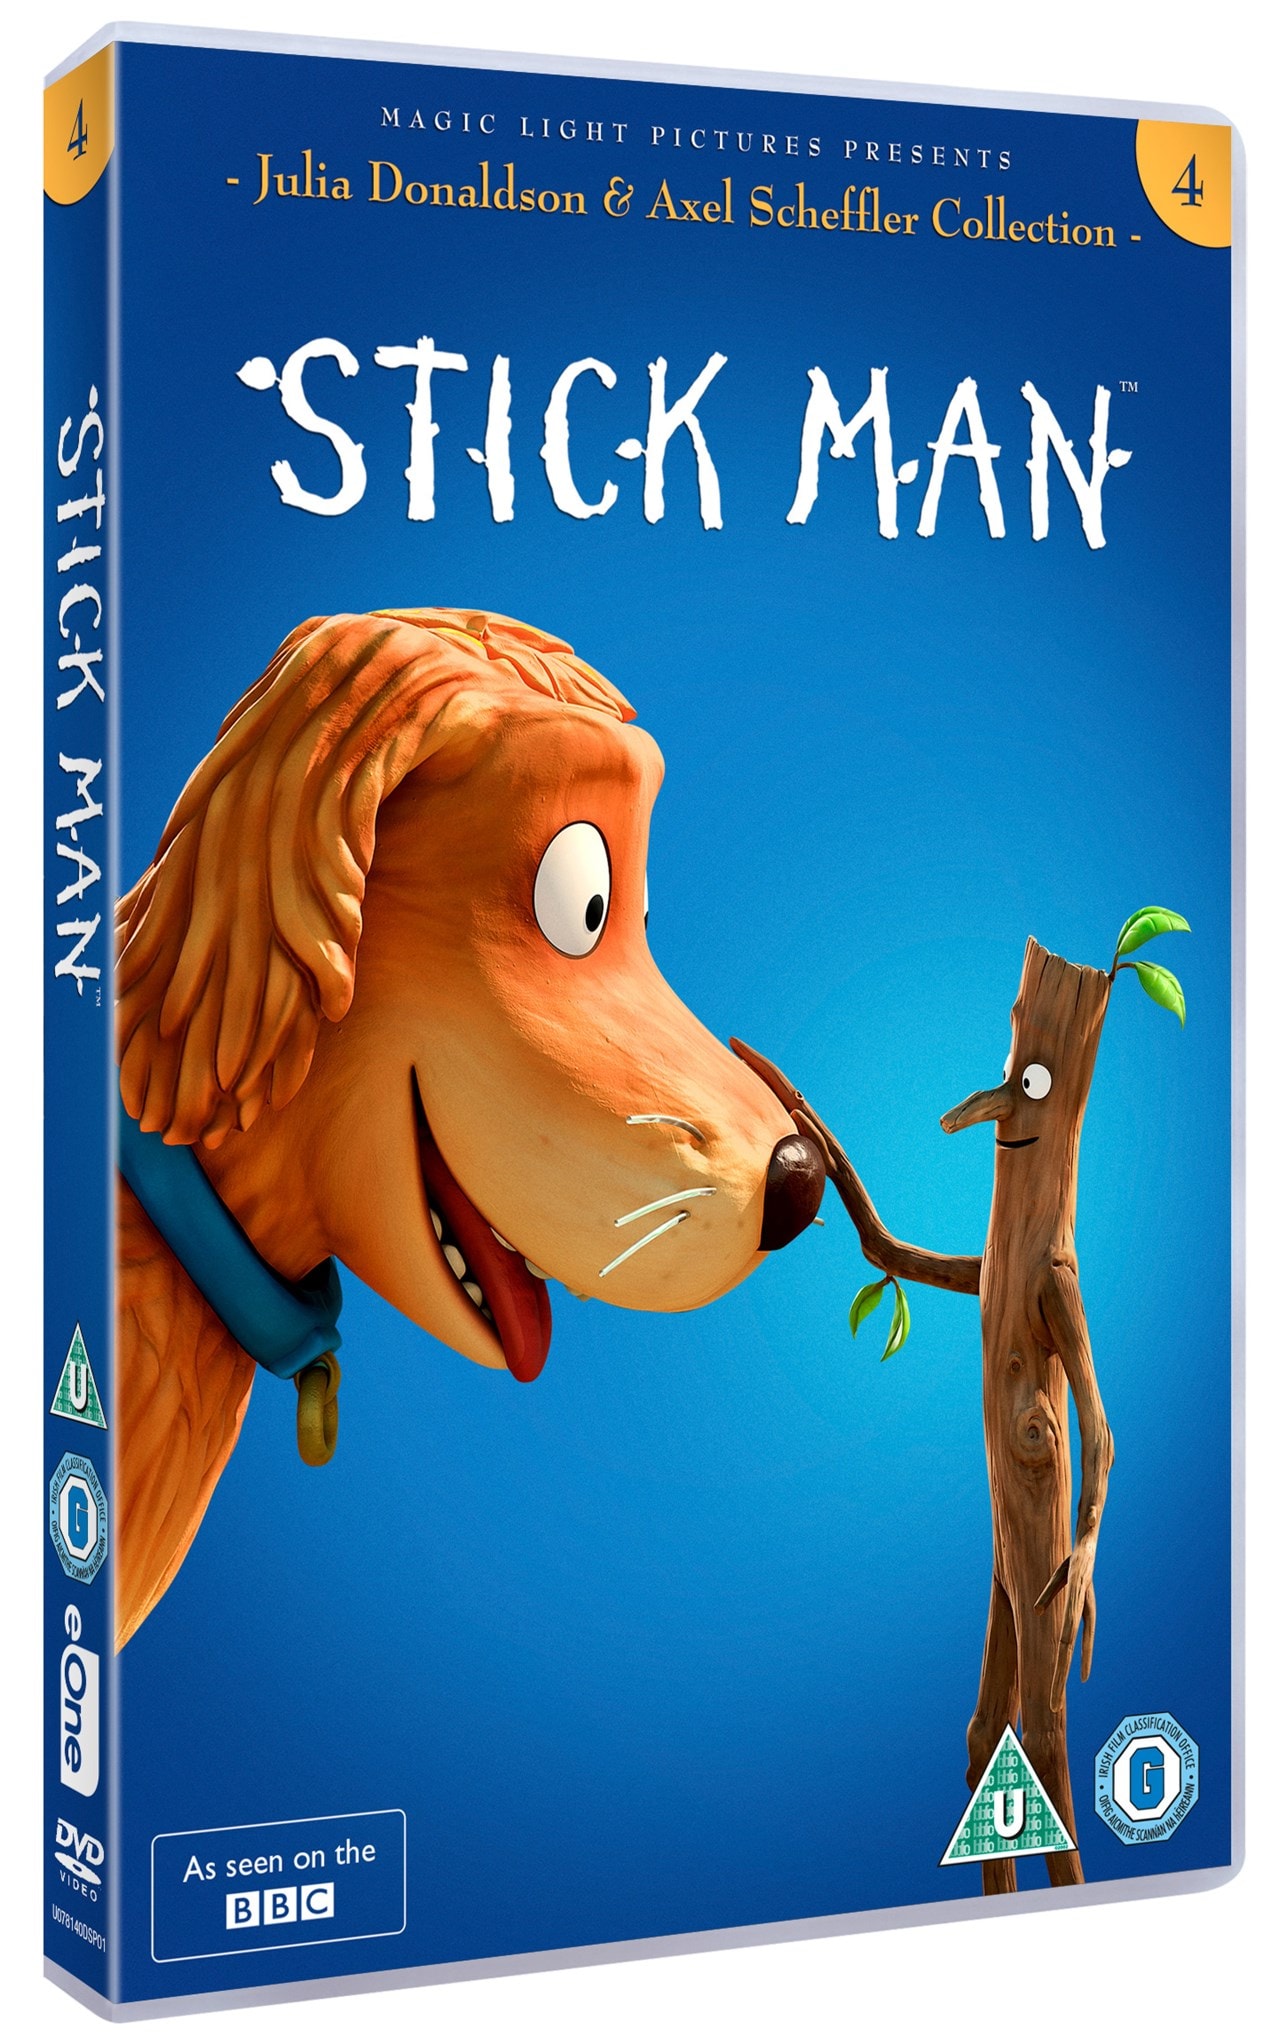 Stick Man | DVD | Free shipping over £20 | HMV Store